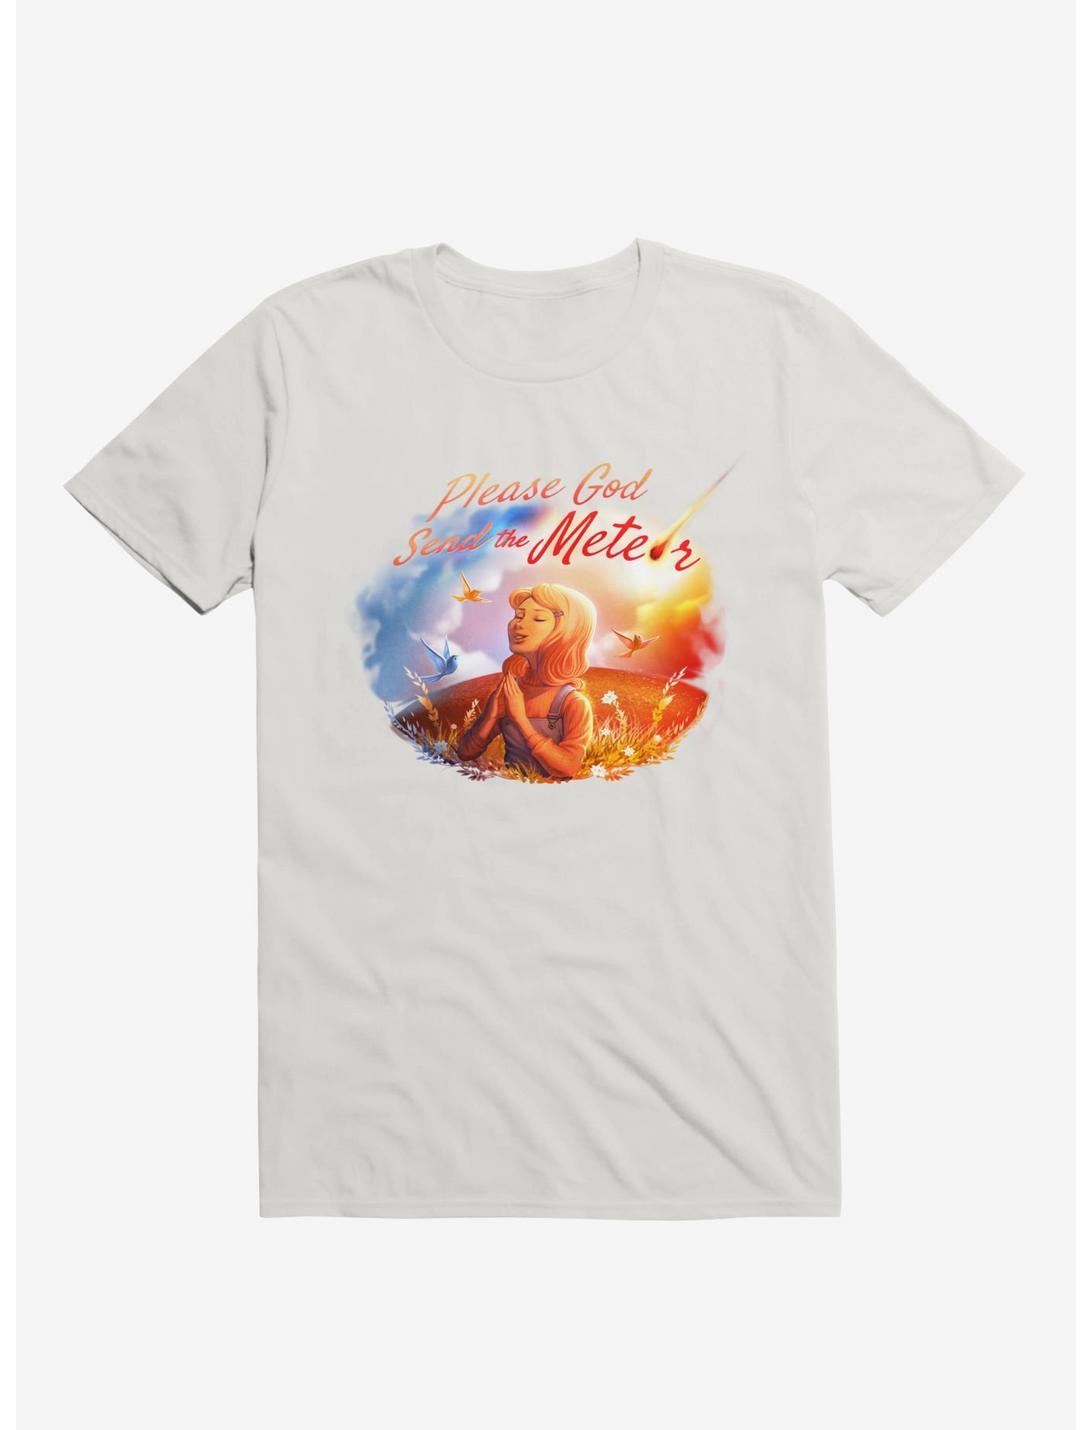 Please God Send The Meteor White T-Shirt, WHITE, hi-res